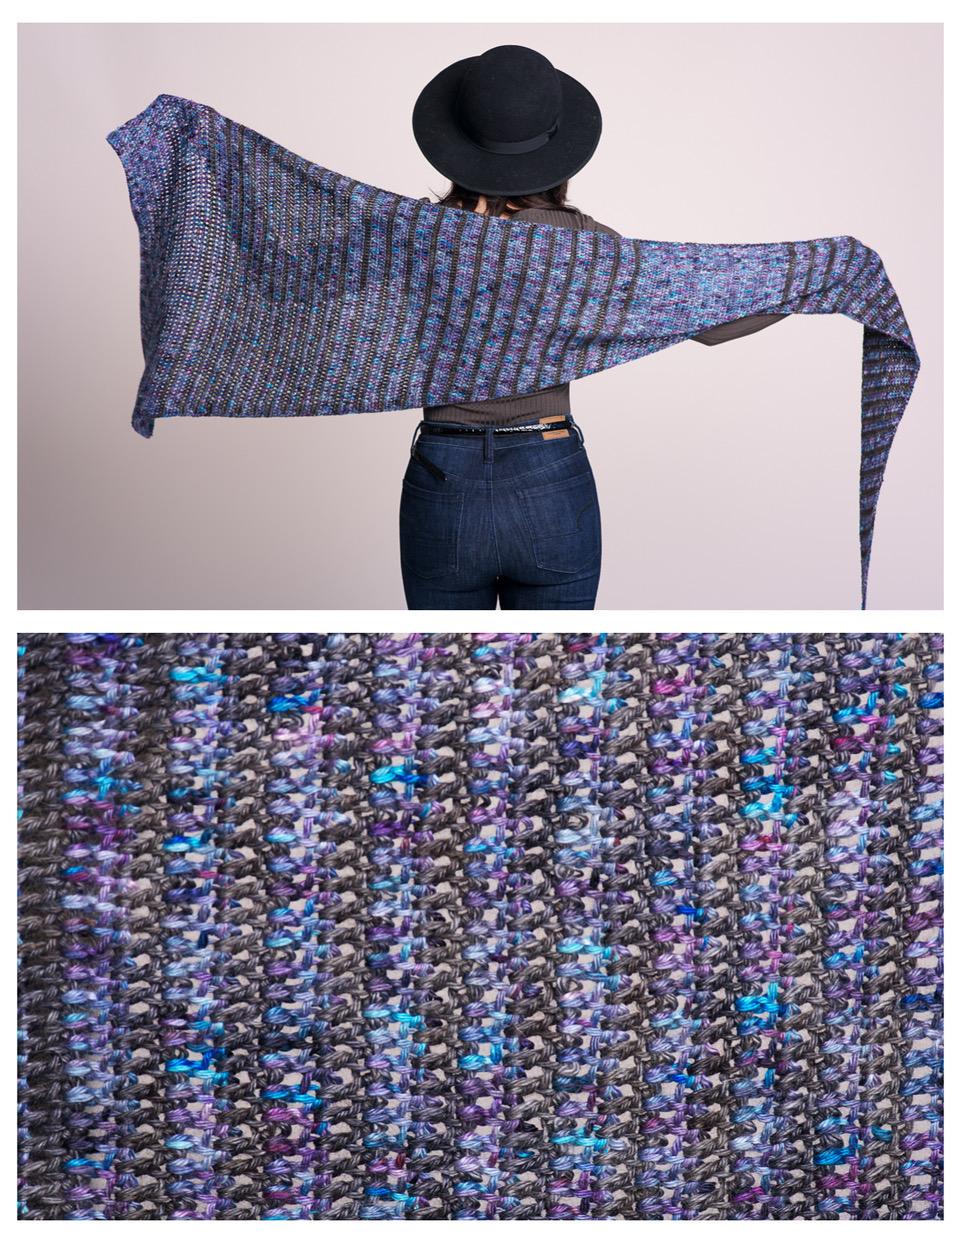 lilith crochet pattern free dk weight yarn hand dyed beginner